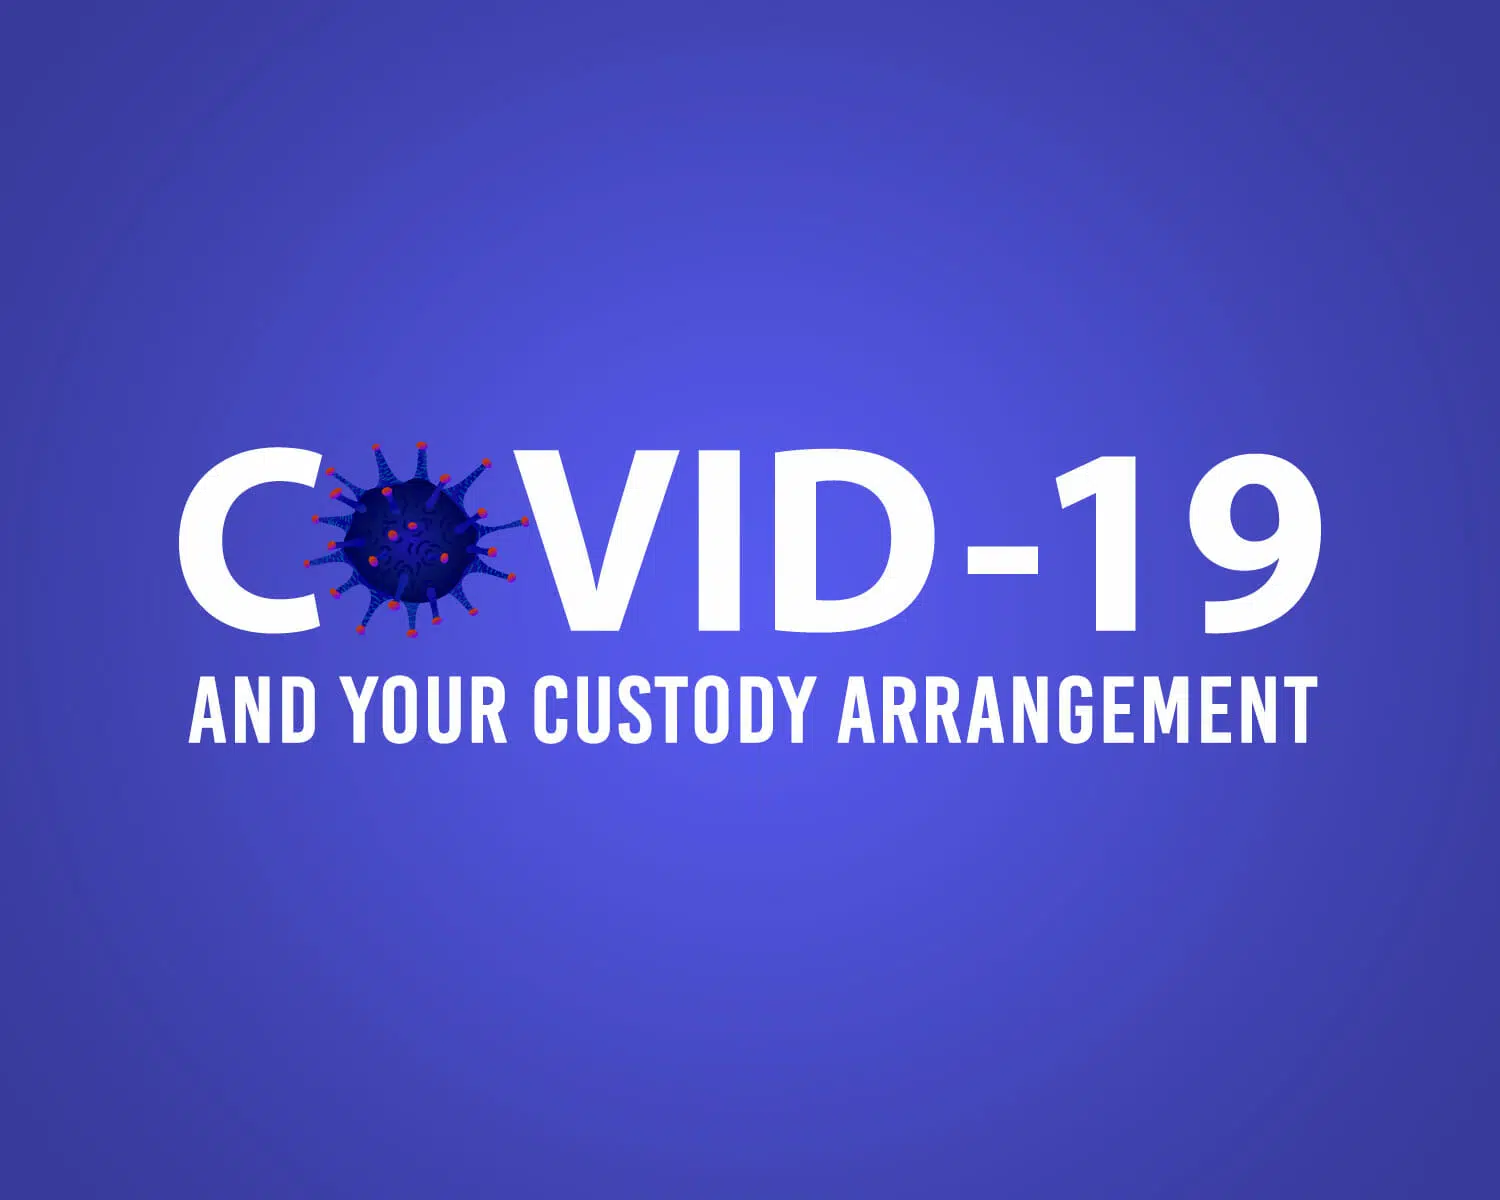 COVID-19 and your custody arrangement